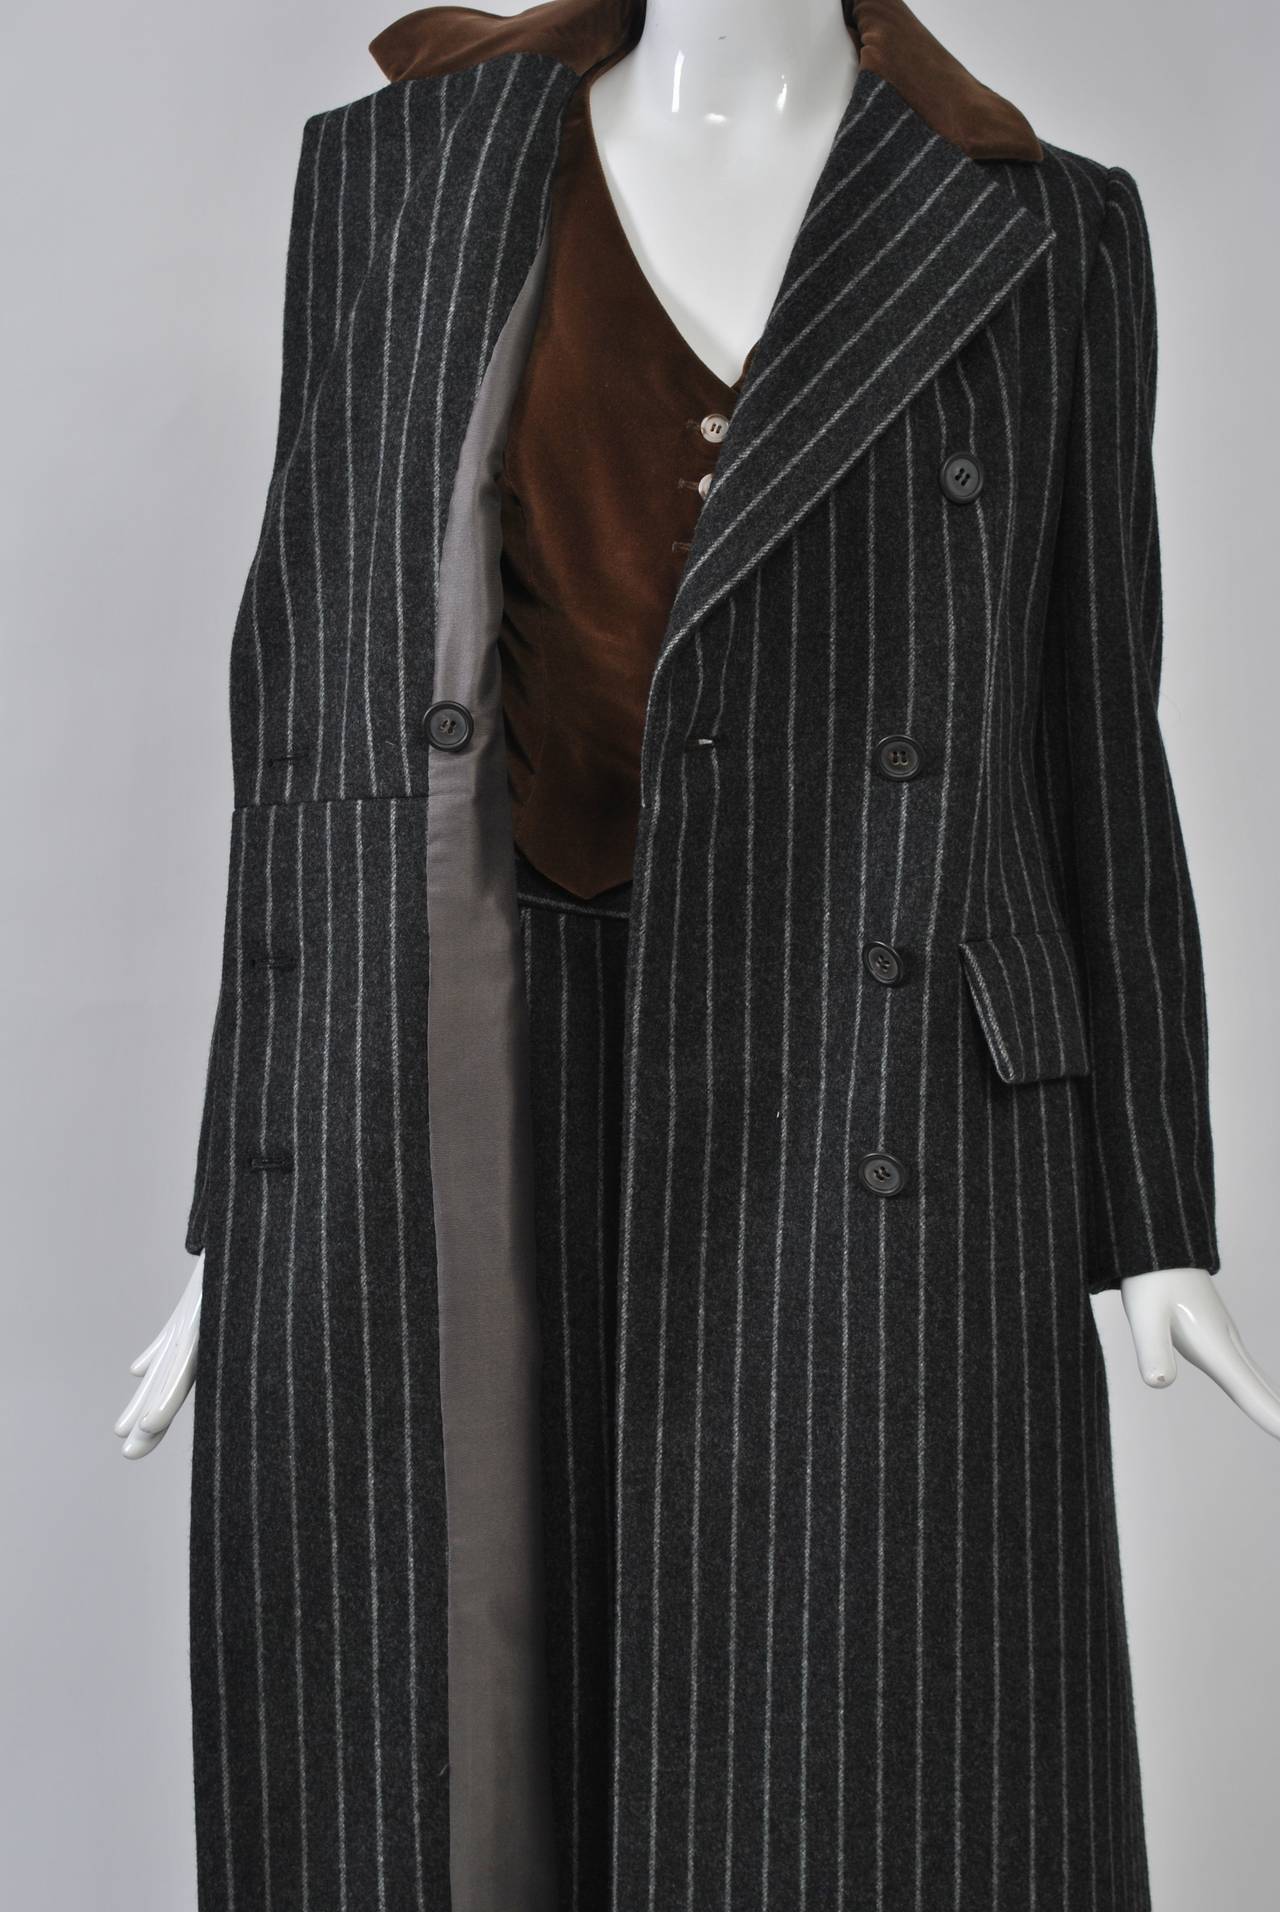 Bill Blass Pinstripe Coat Suit 1